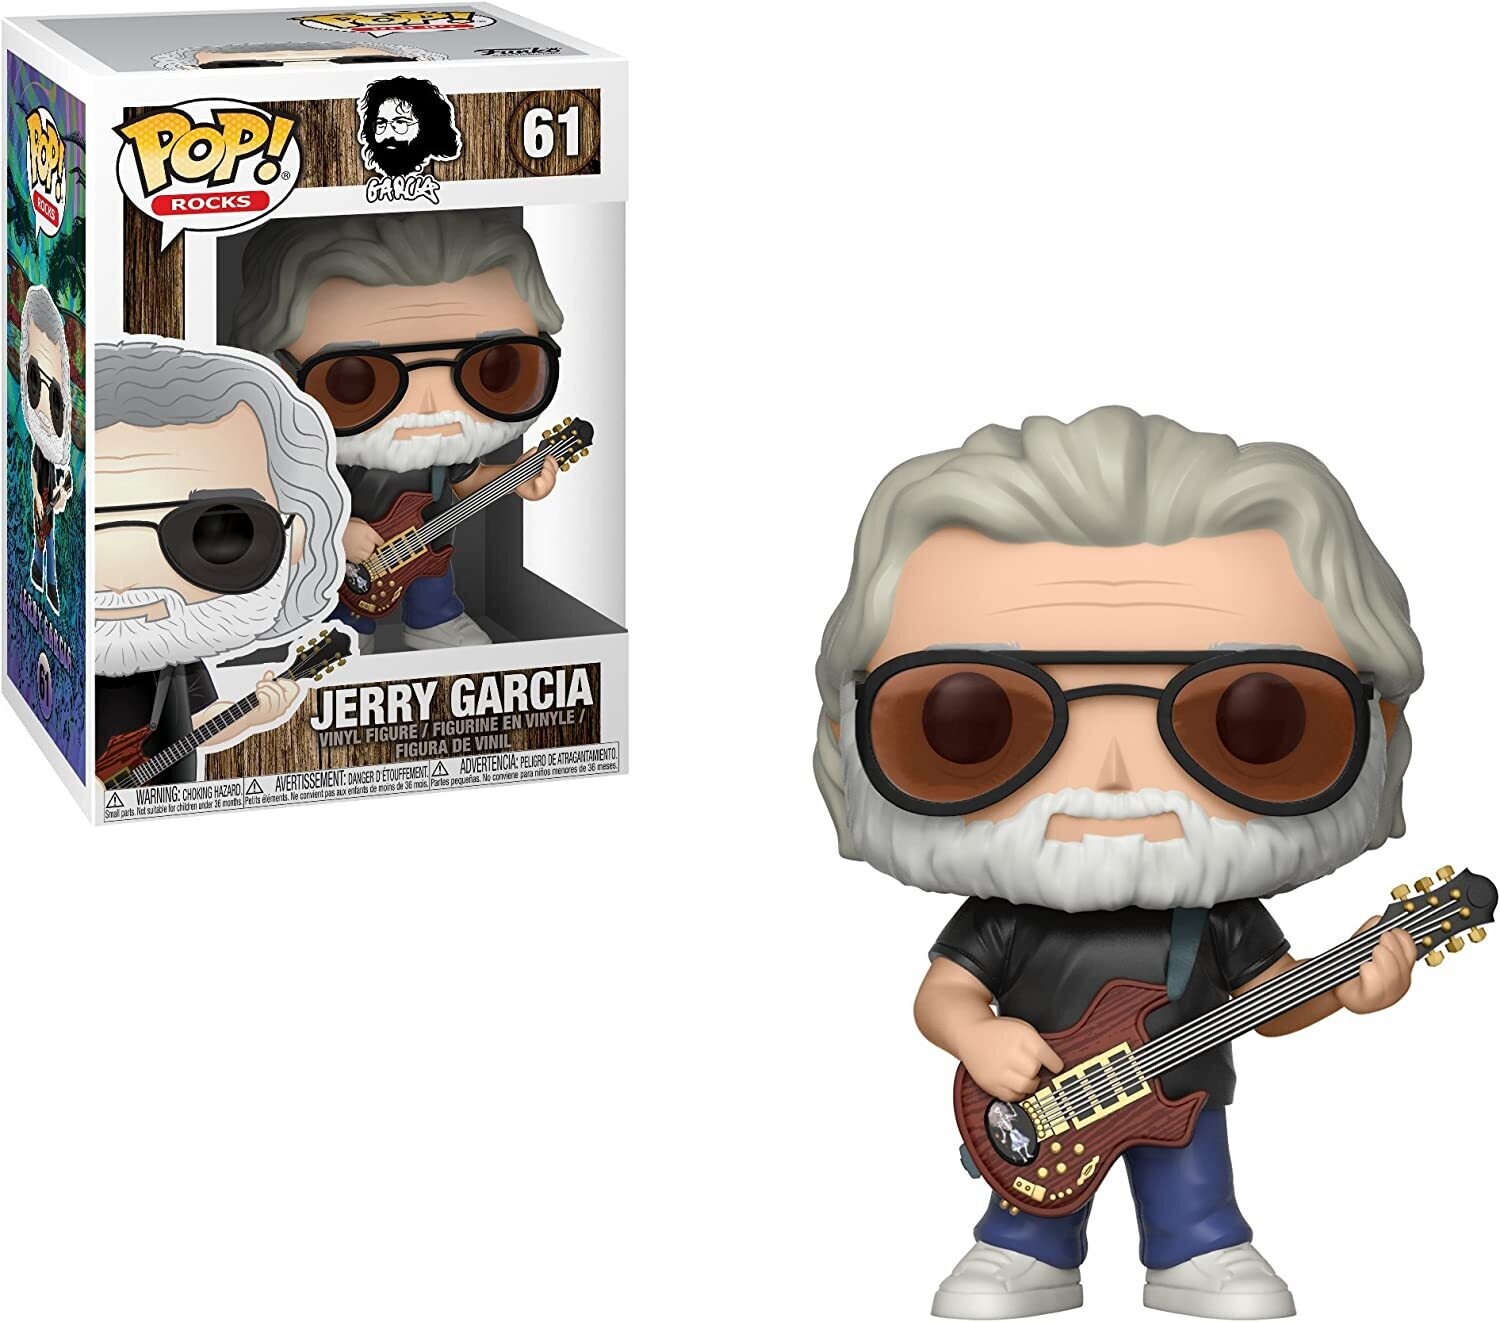 Grateful Dead's Jerry Garcia 3 3/4"H POP! Rocks Vinyl Figure #61